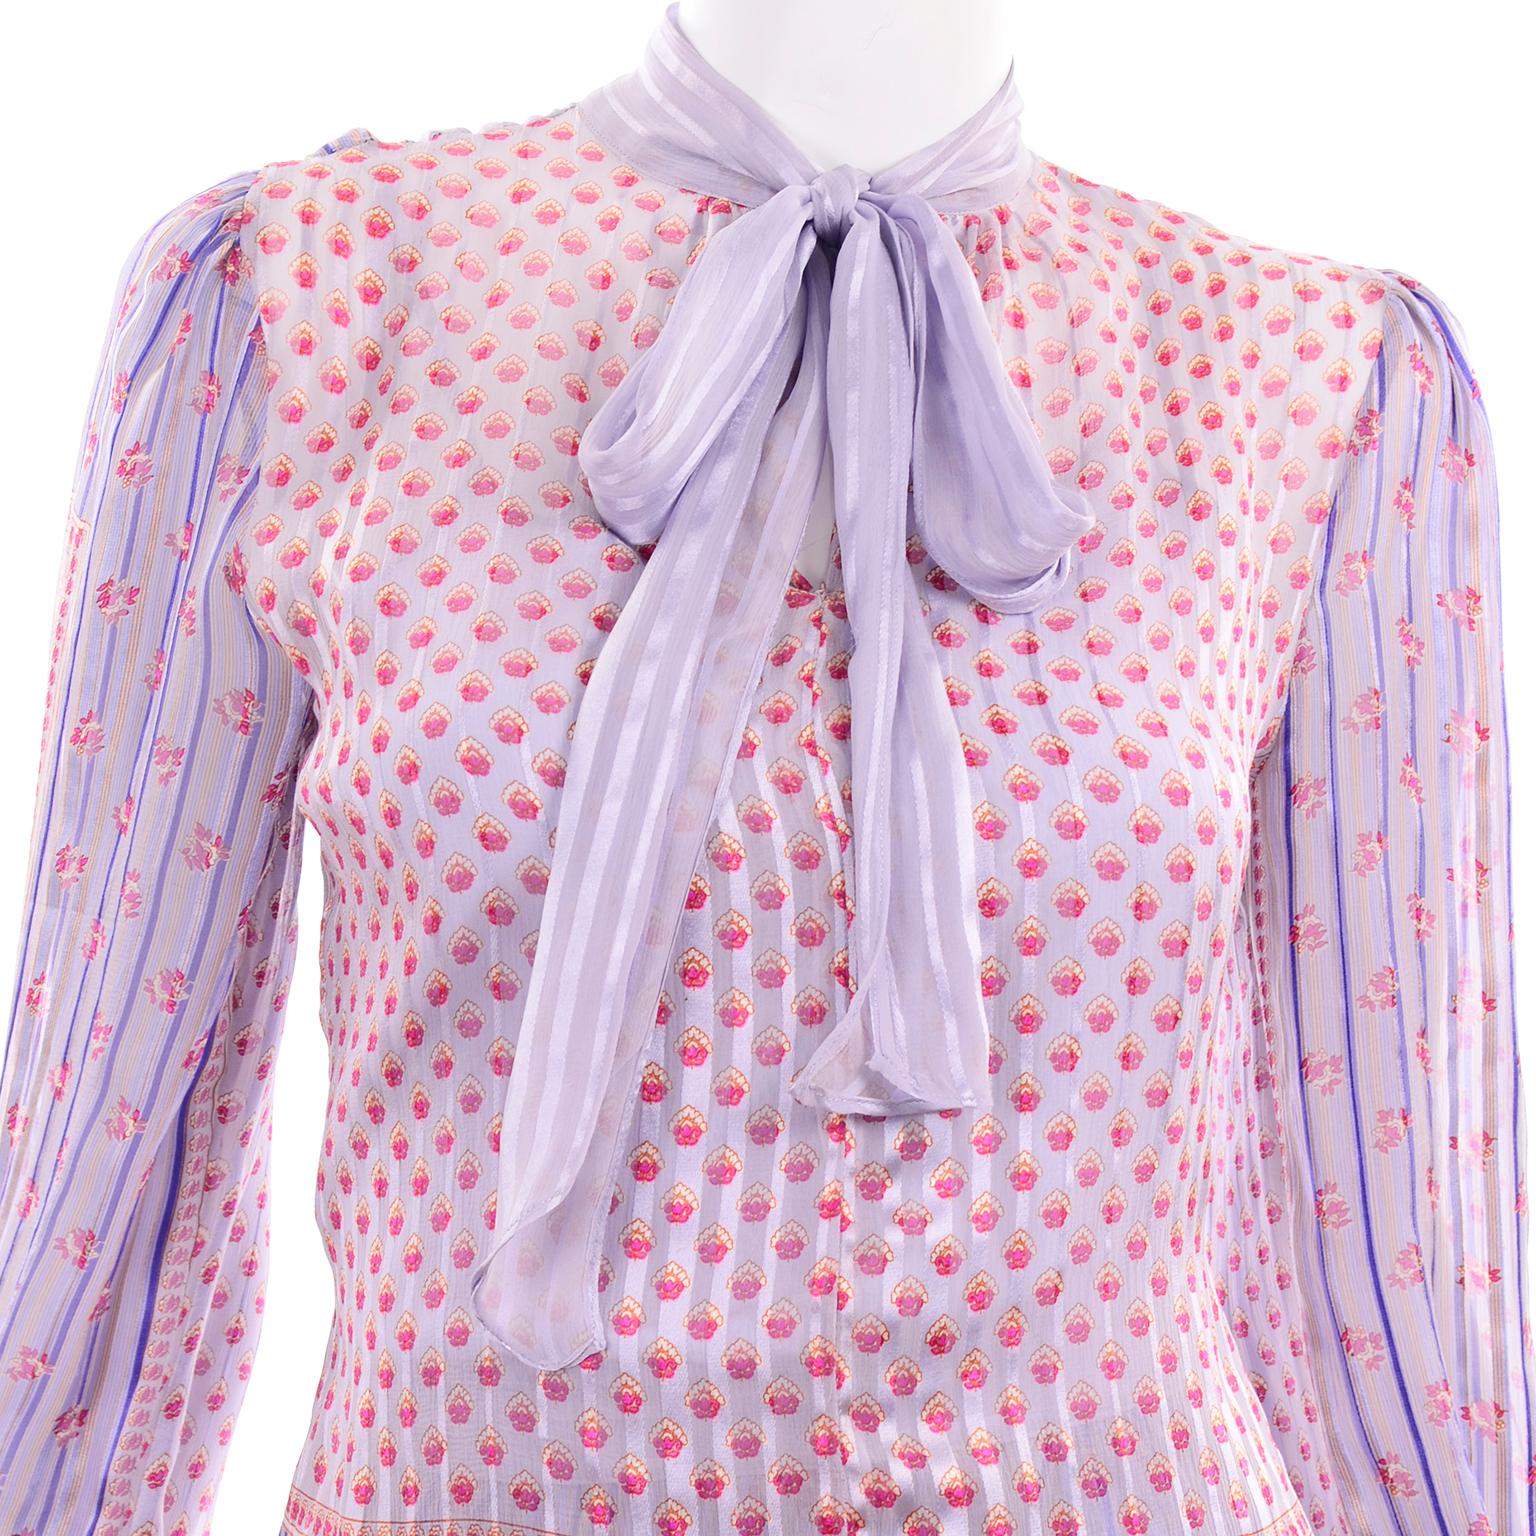 Designer Silk Chiffon 2 Pc Dress in Purple Yellow Pink Floral Print Pattern Mix 4